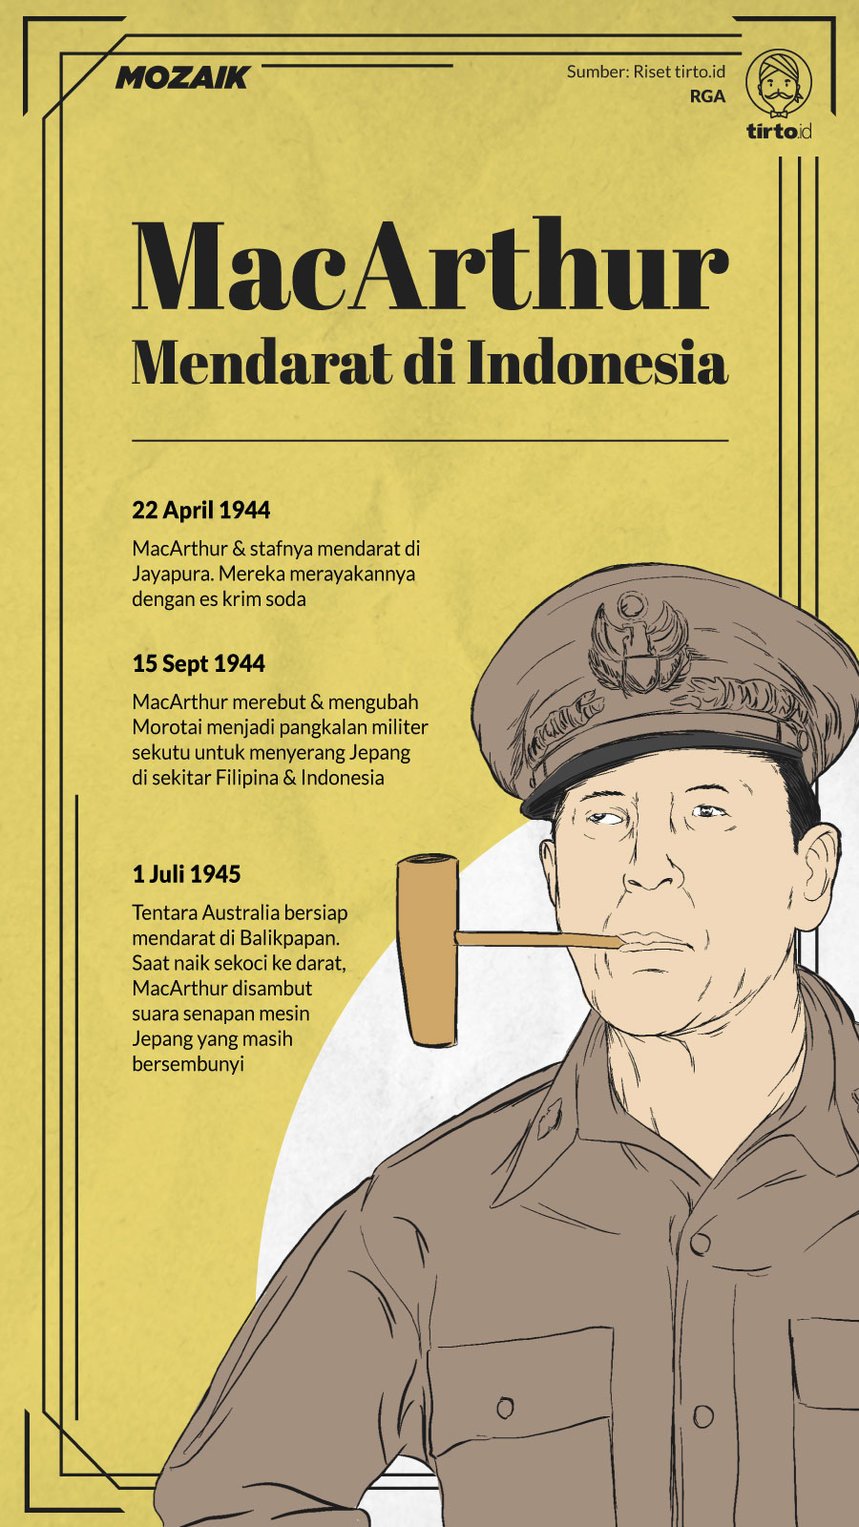 Infografik Mozaik MacArthur mendara di Indonesia